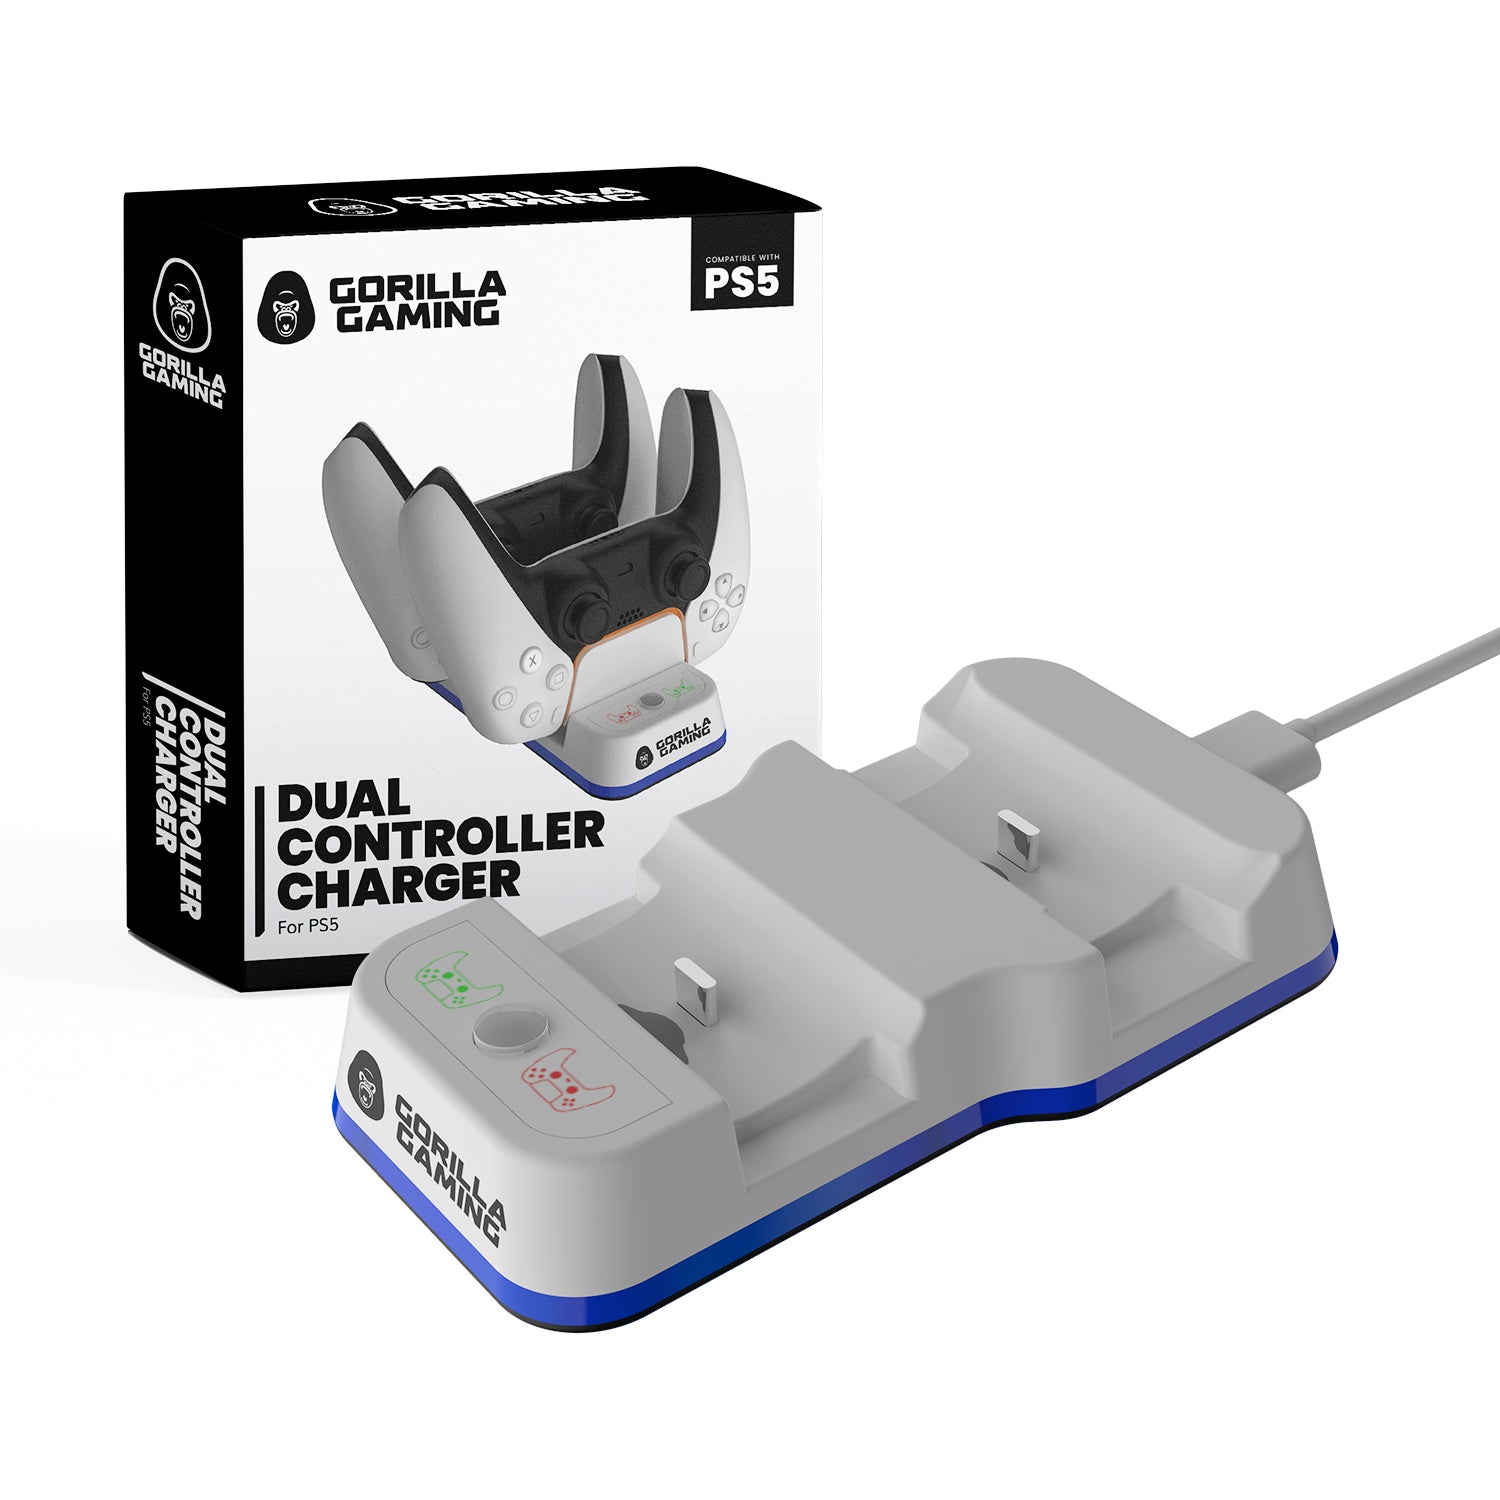 Gorilla Gaming PS5 Dual Controller Charger